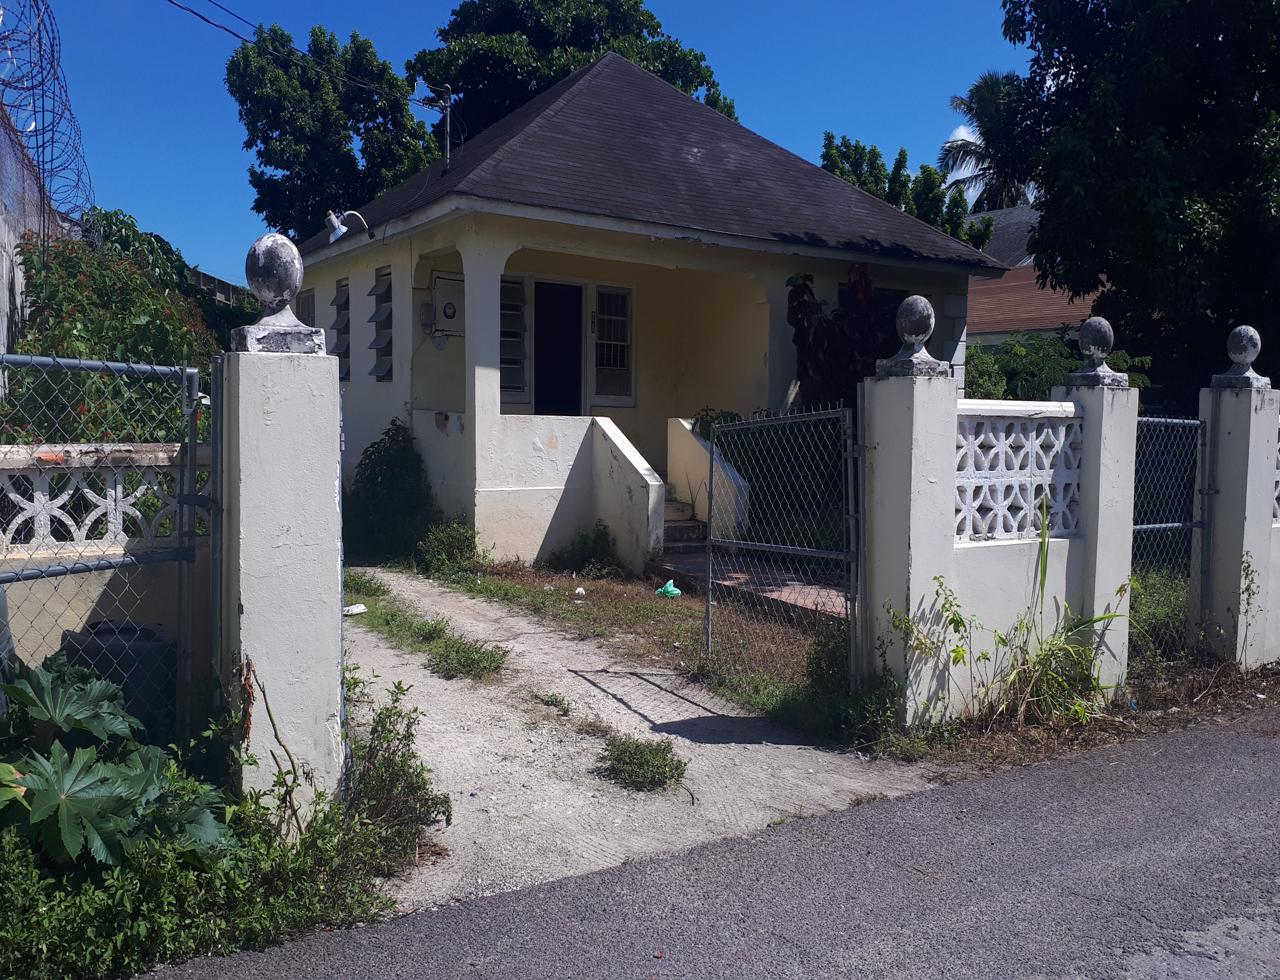 Nassau Fixer Upper home for sale